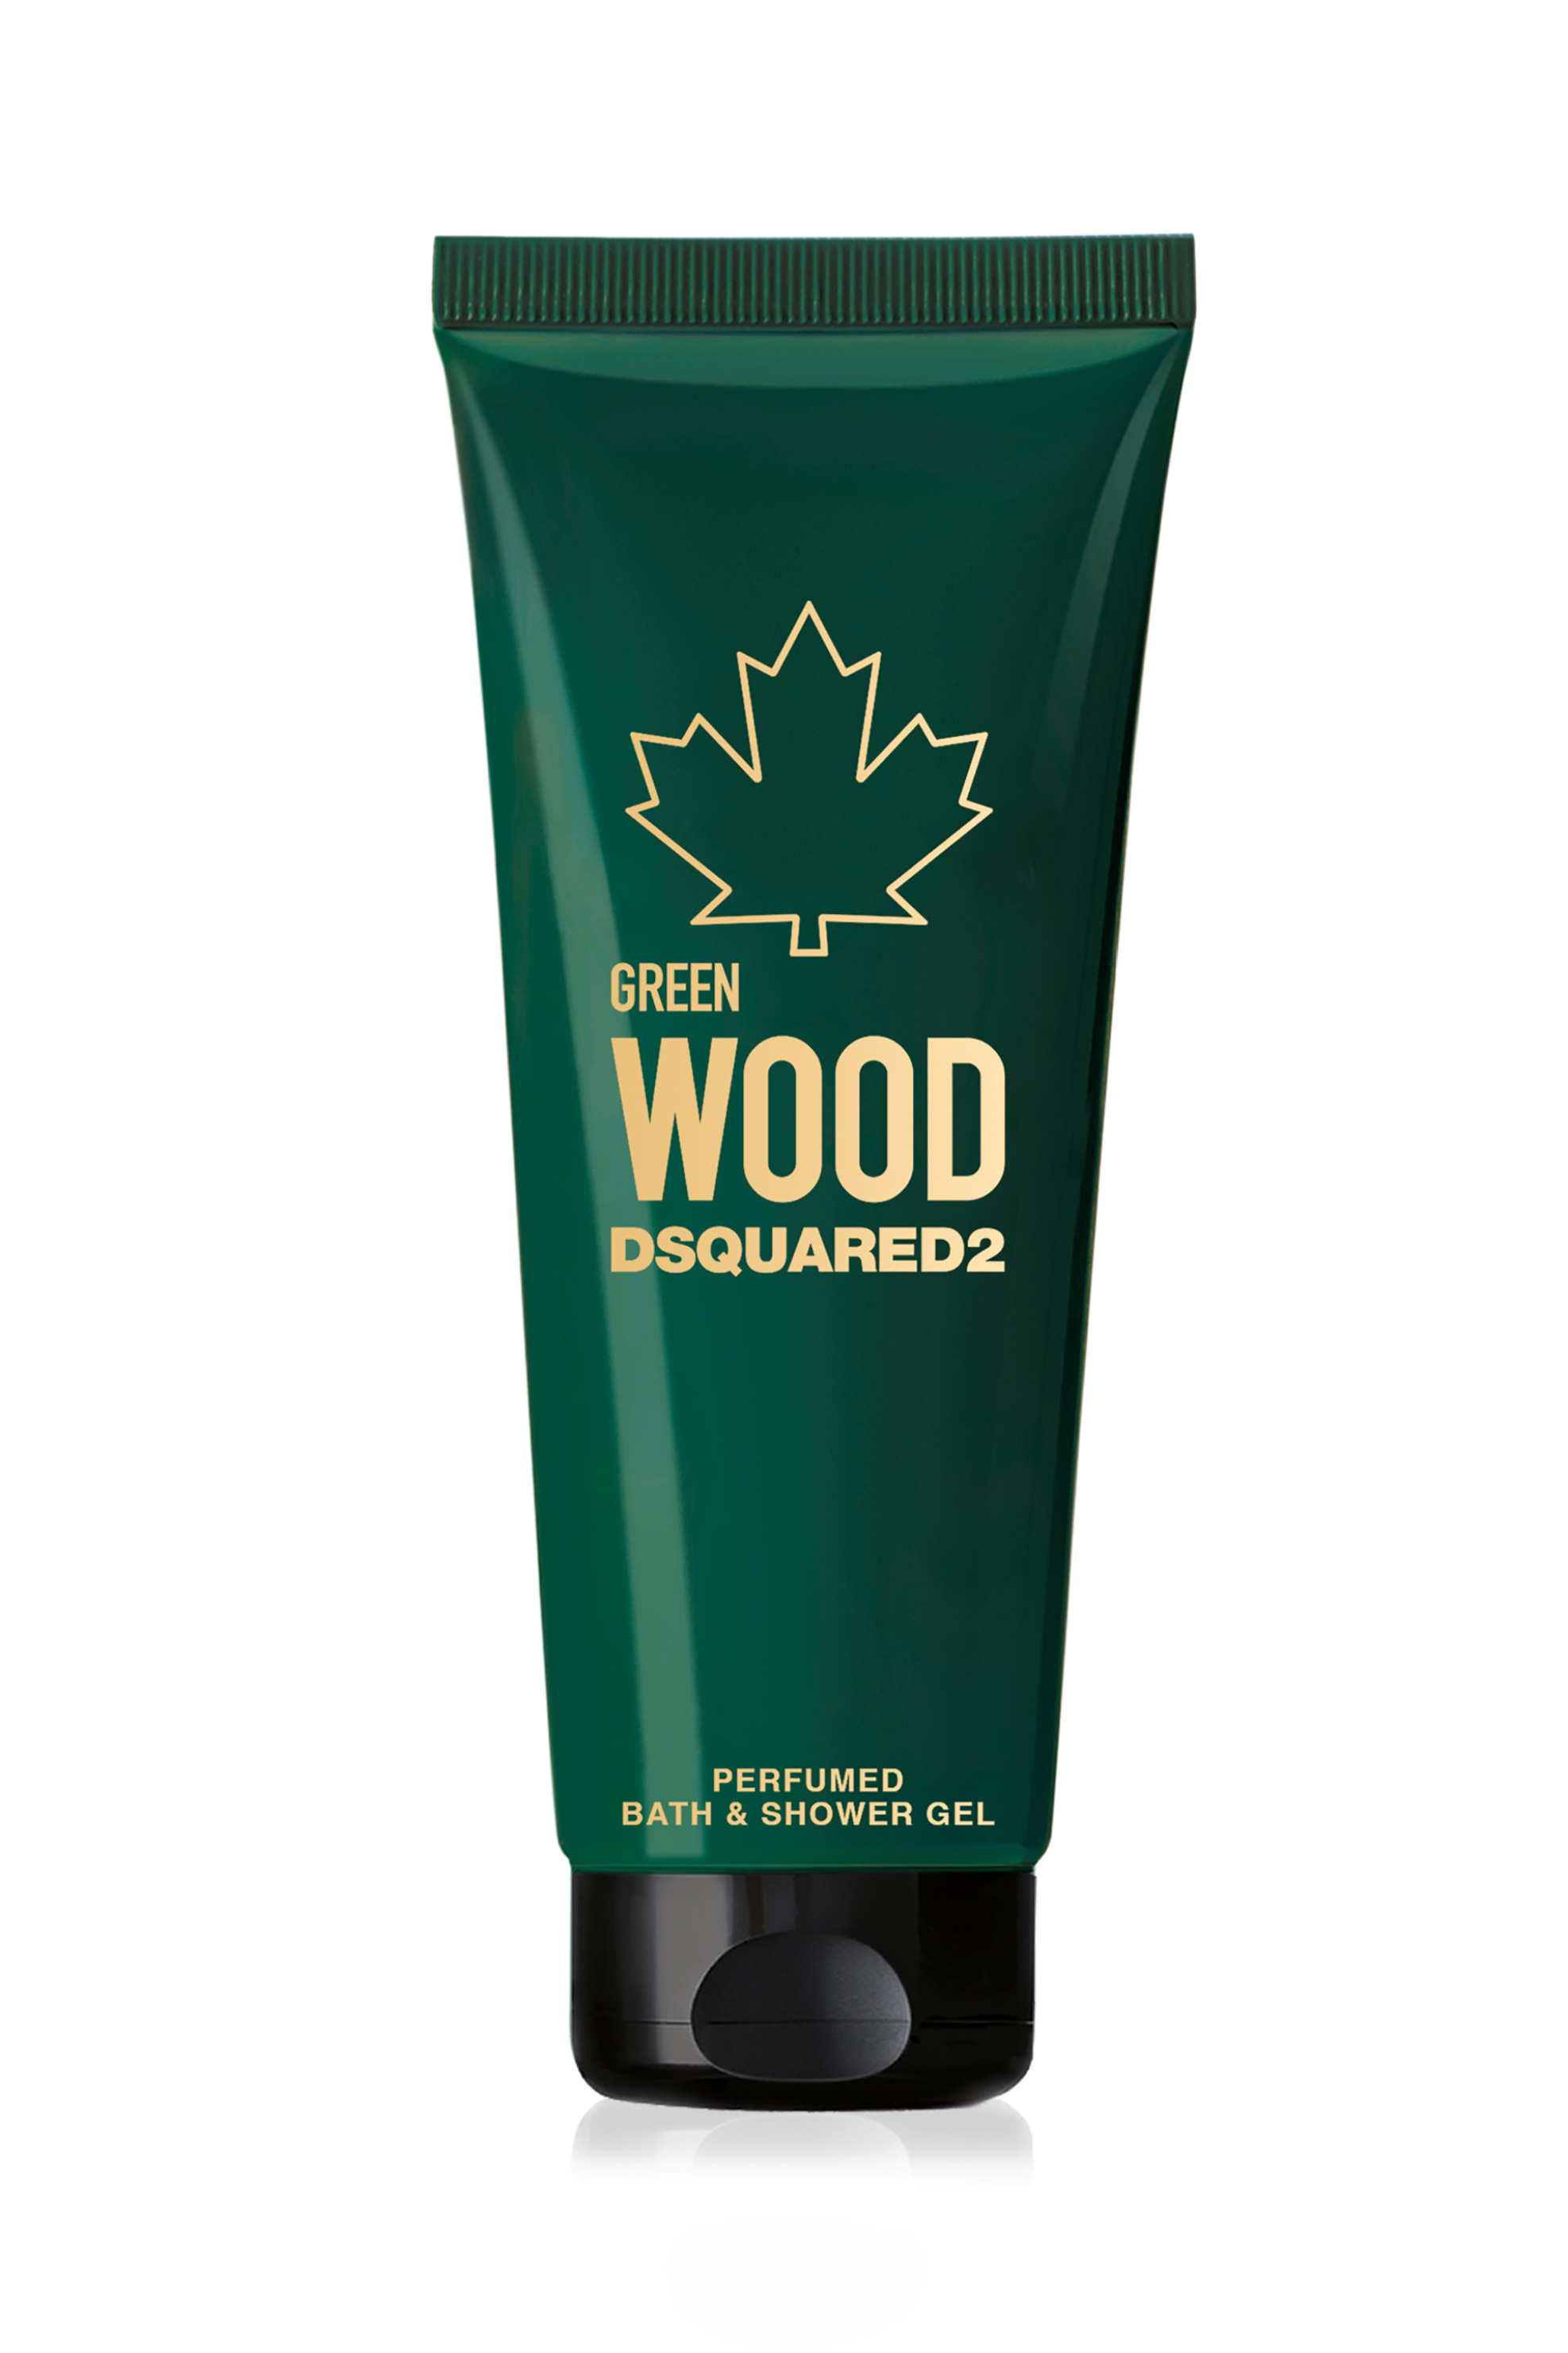 Dsquared2 Wood Green Pour Homme Perfumed Bath & Shower Gel Tube 250 ml - 5D27 1054877